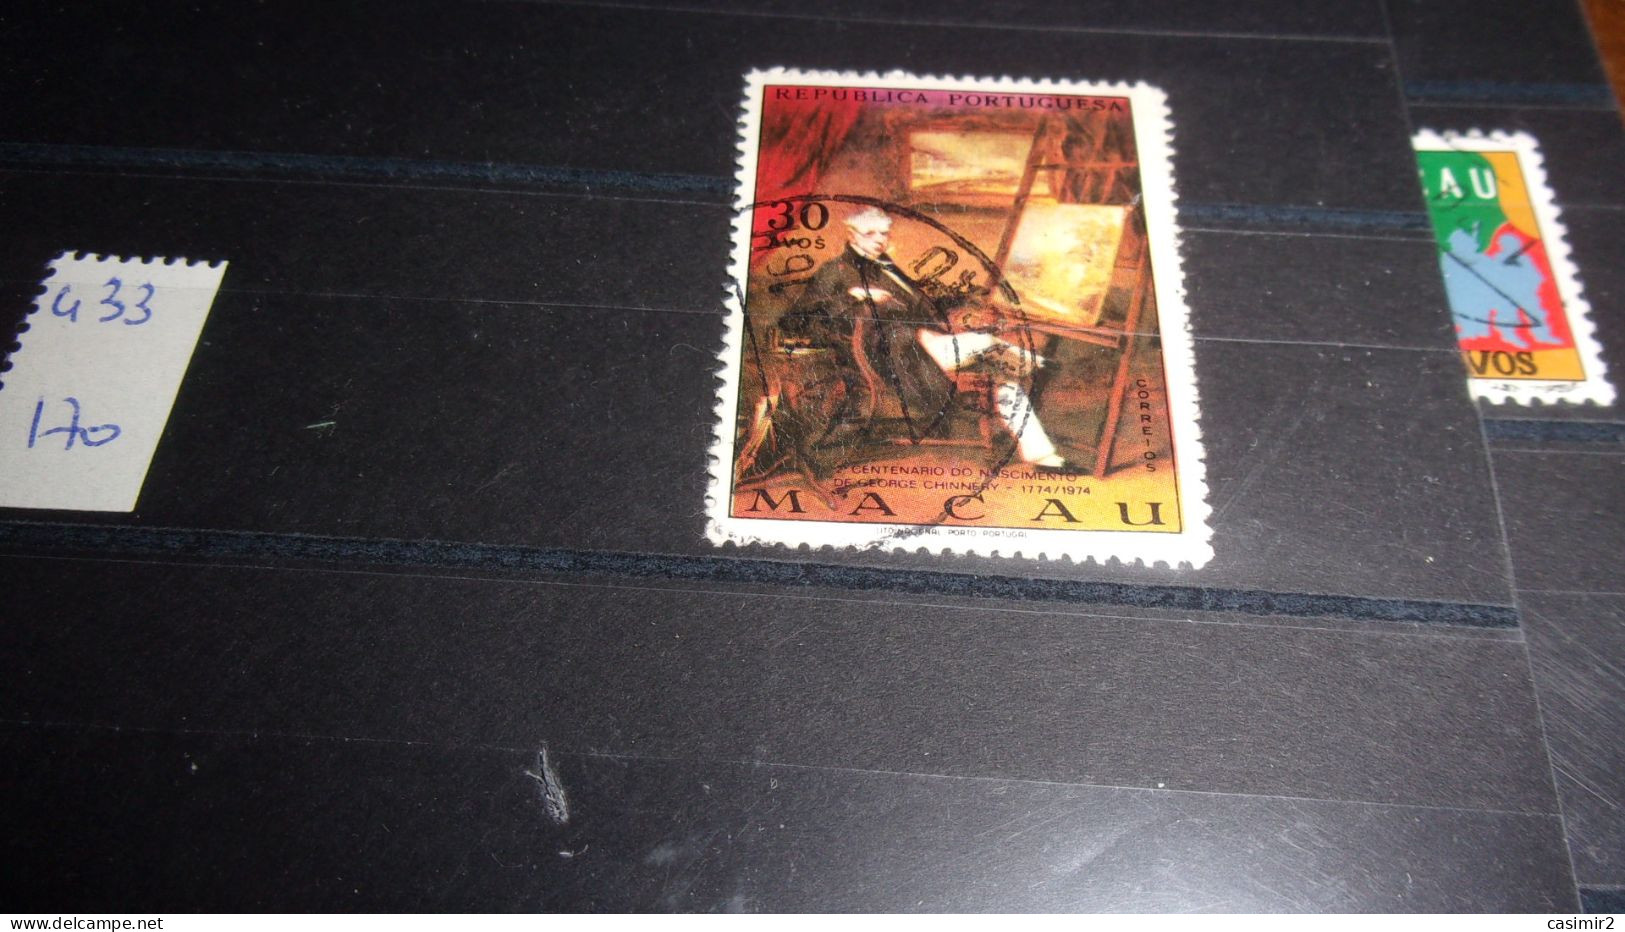 MACAO YVERT N° 433 - Used Stamps